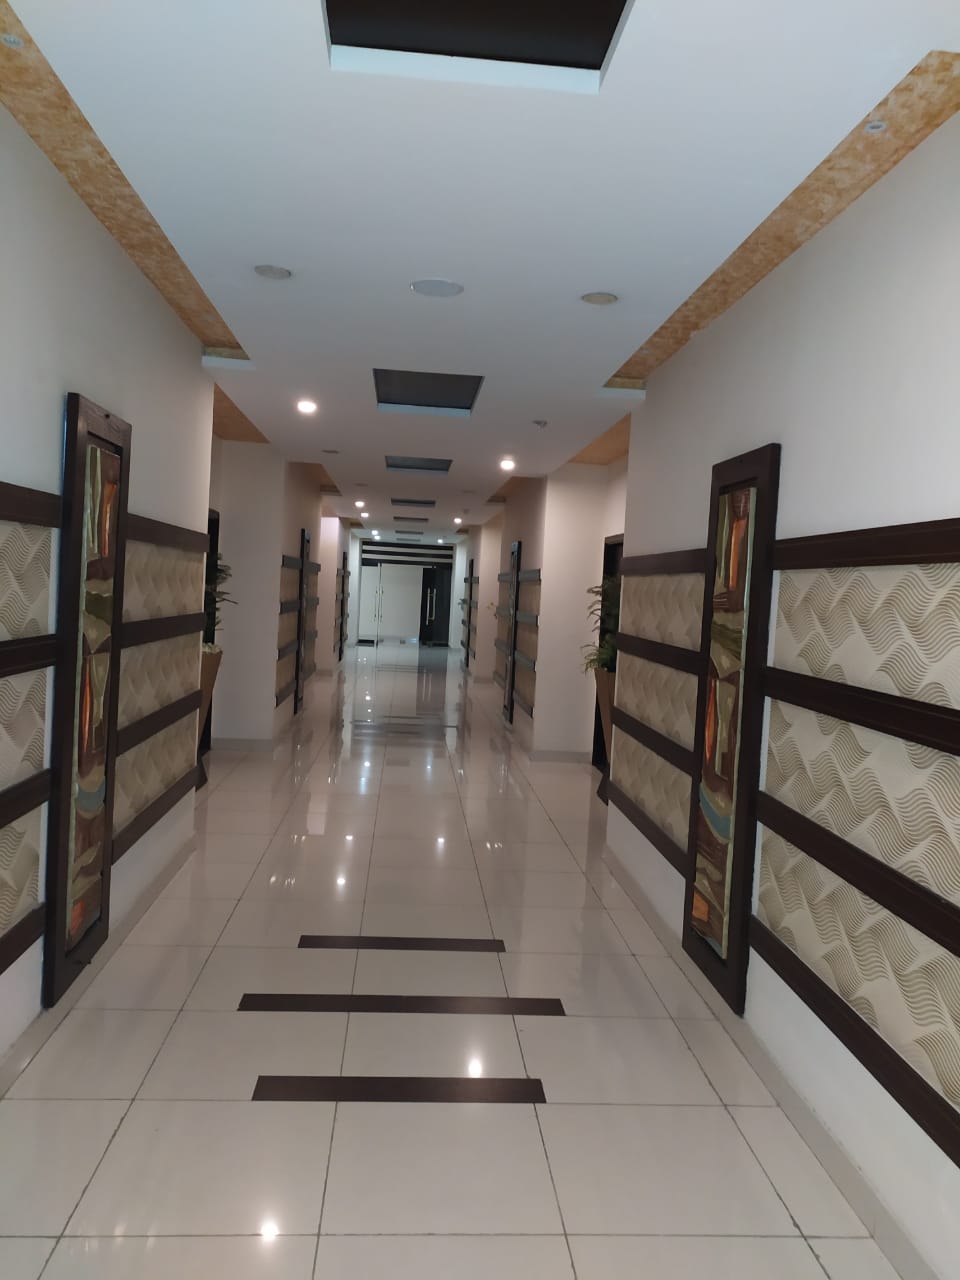 Furnished Room available for rent at jaranwala road Kohinoor Faisalabad